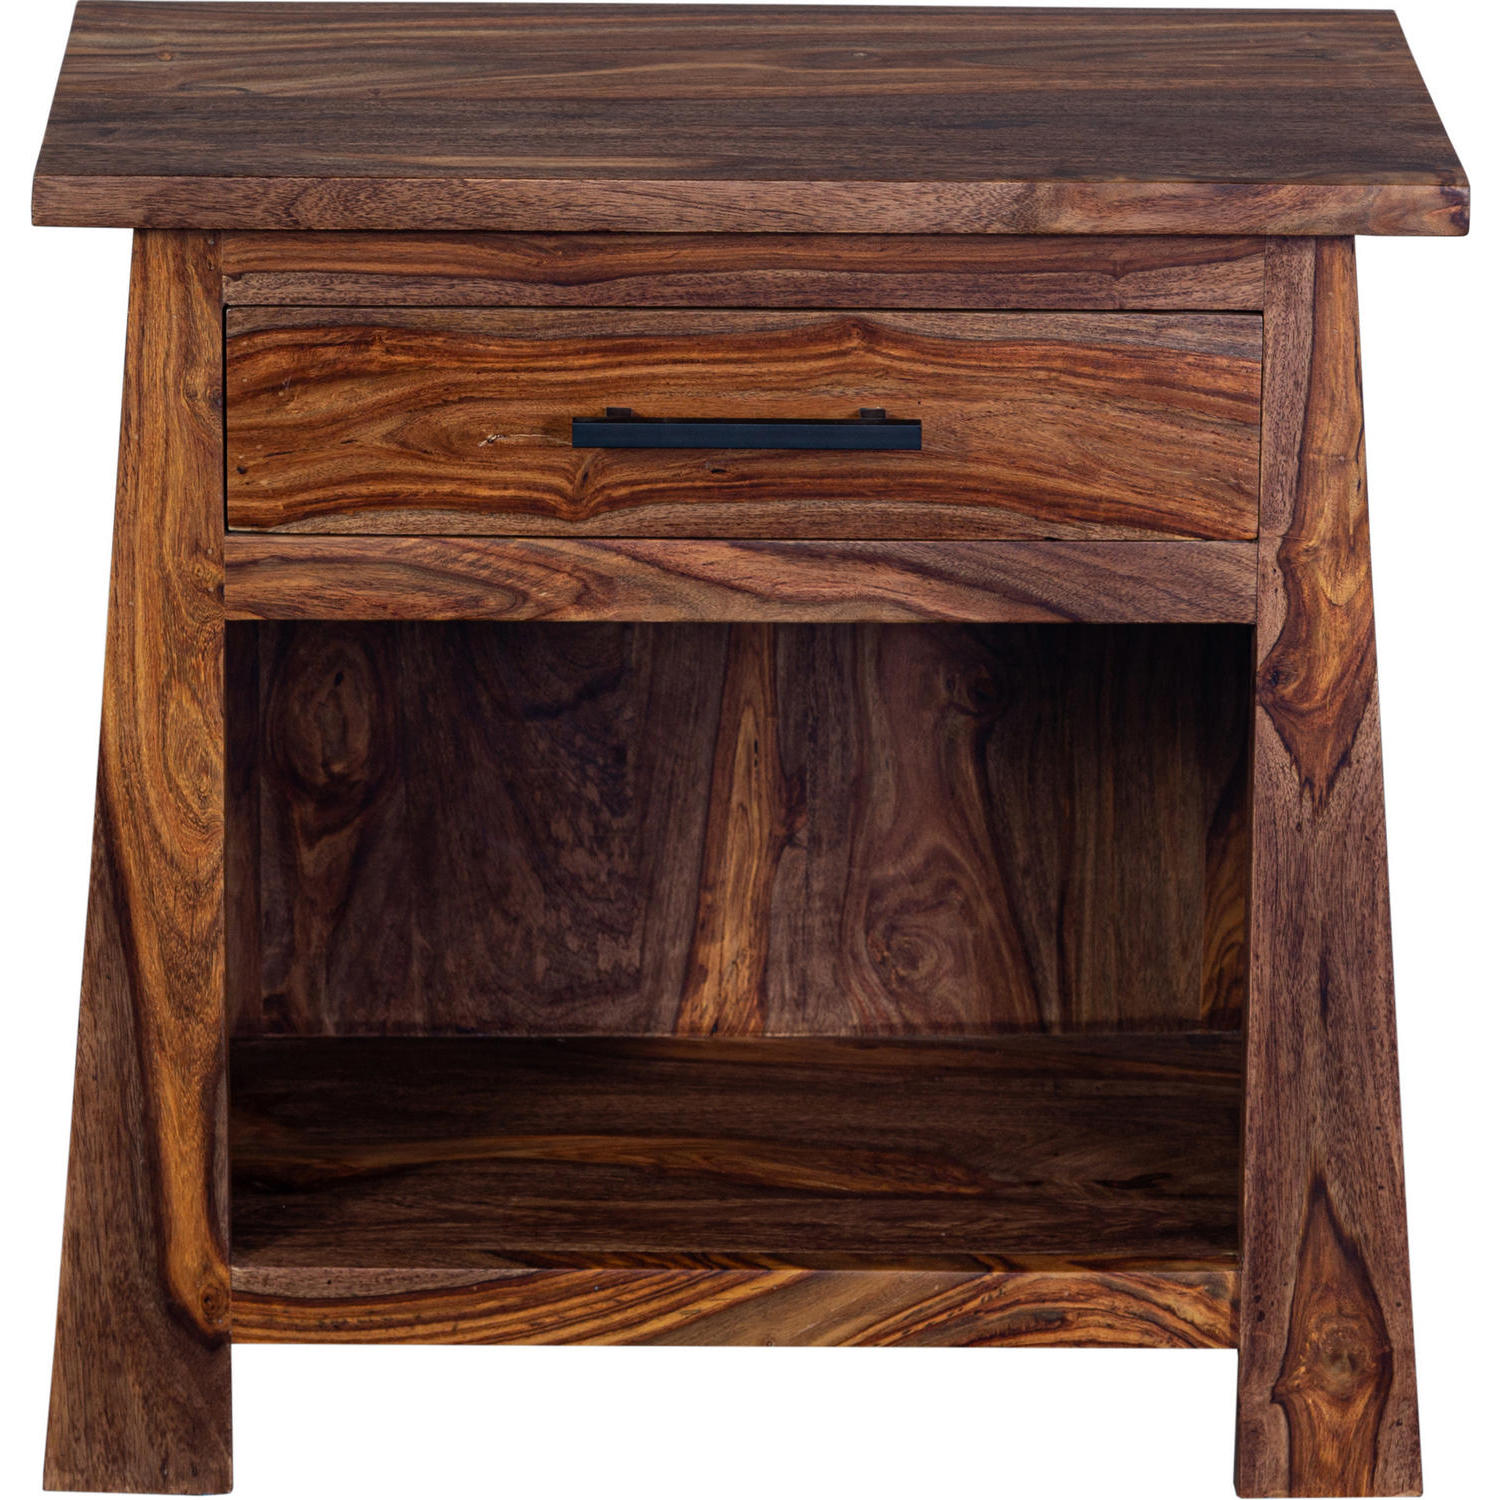 Buy Brown Finish Sheesham Wood Bedside Table